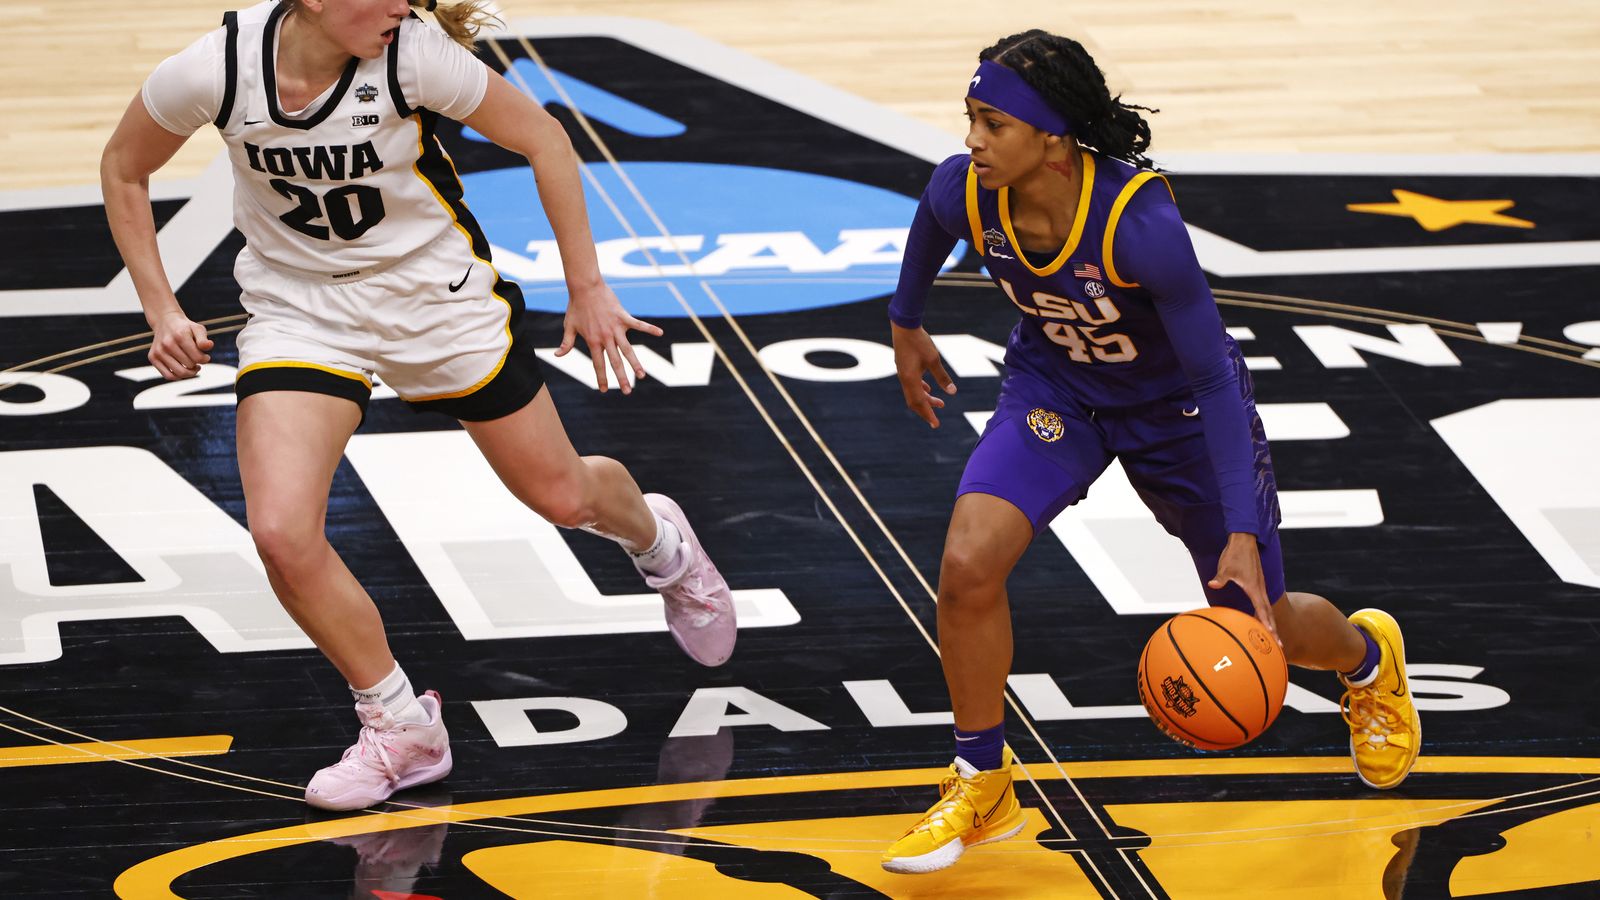 NCAAW College Women's Basketball News, Video, Rumors, Scores, Stats,  Standings - Yahoo Sports